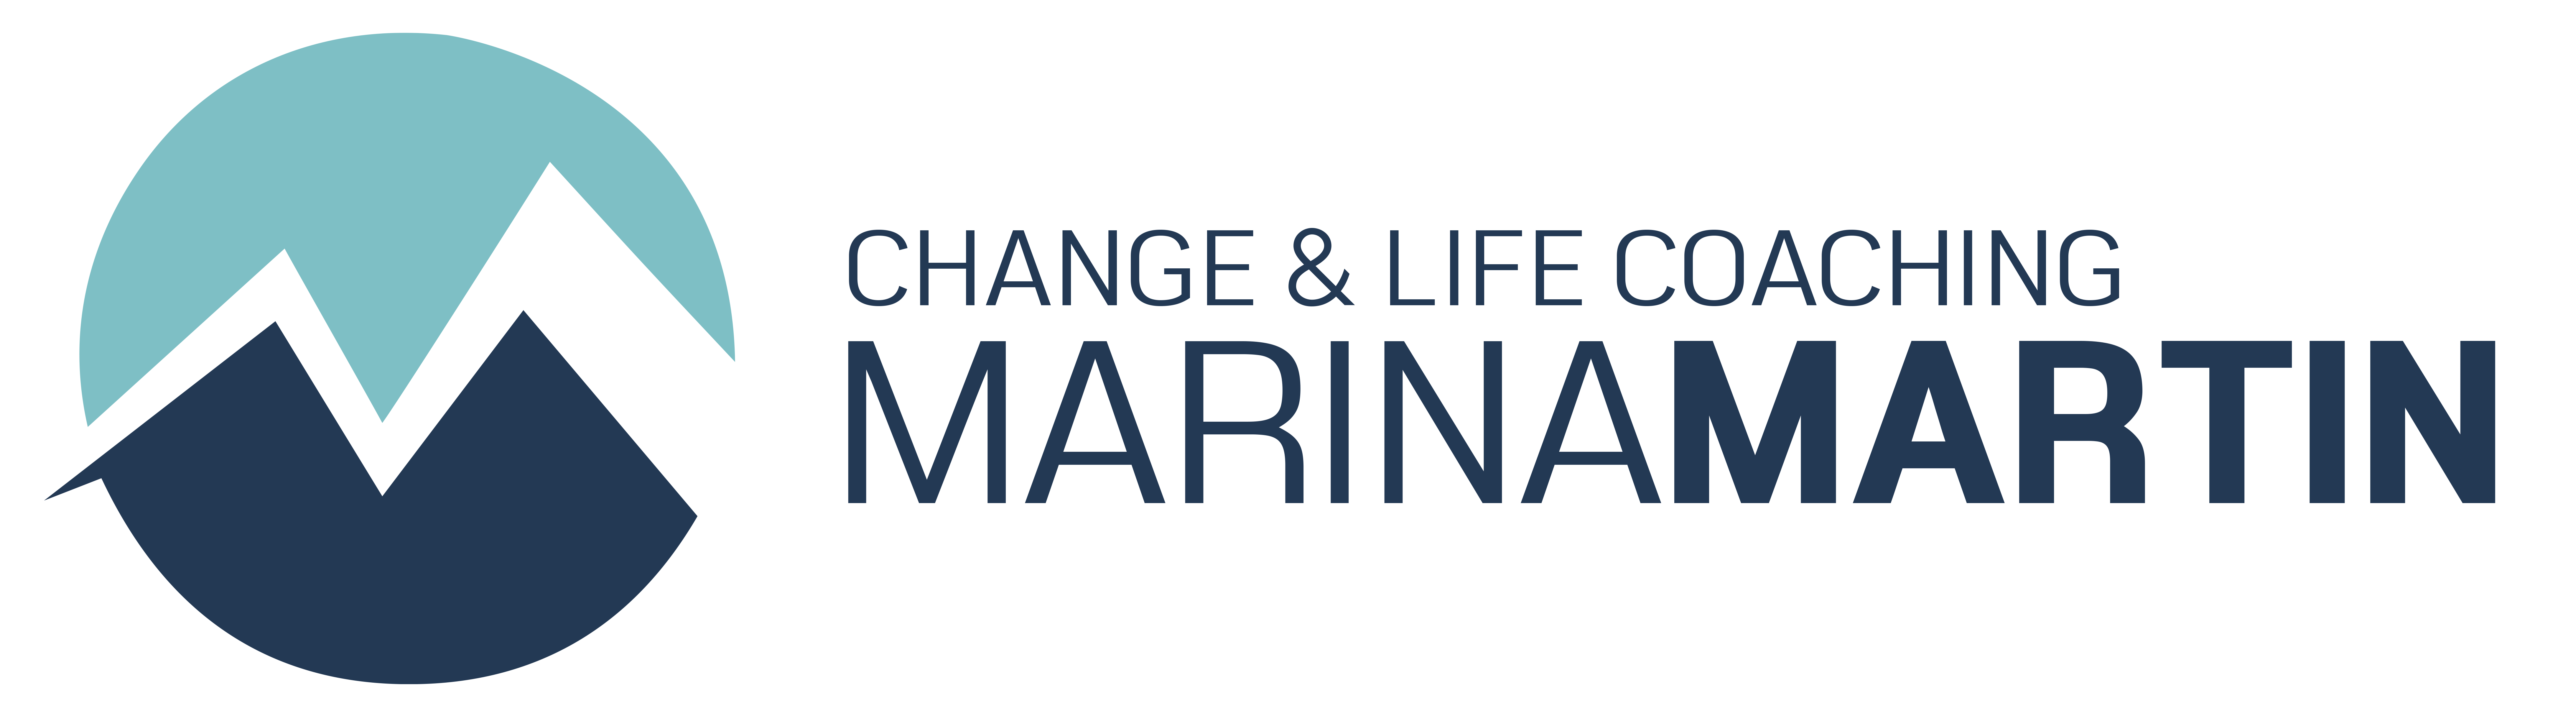 Change & Life Coaching Marina Martin